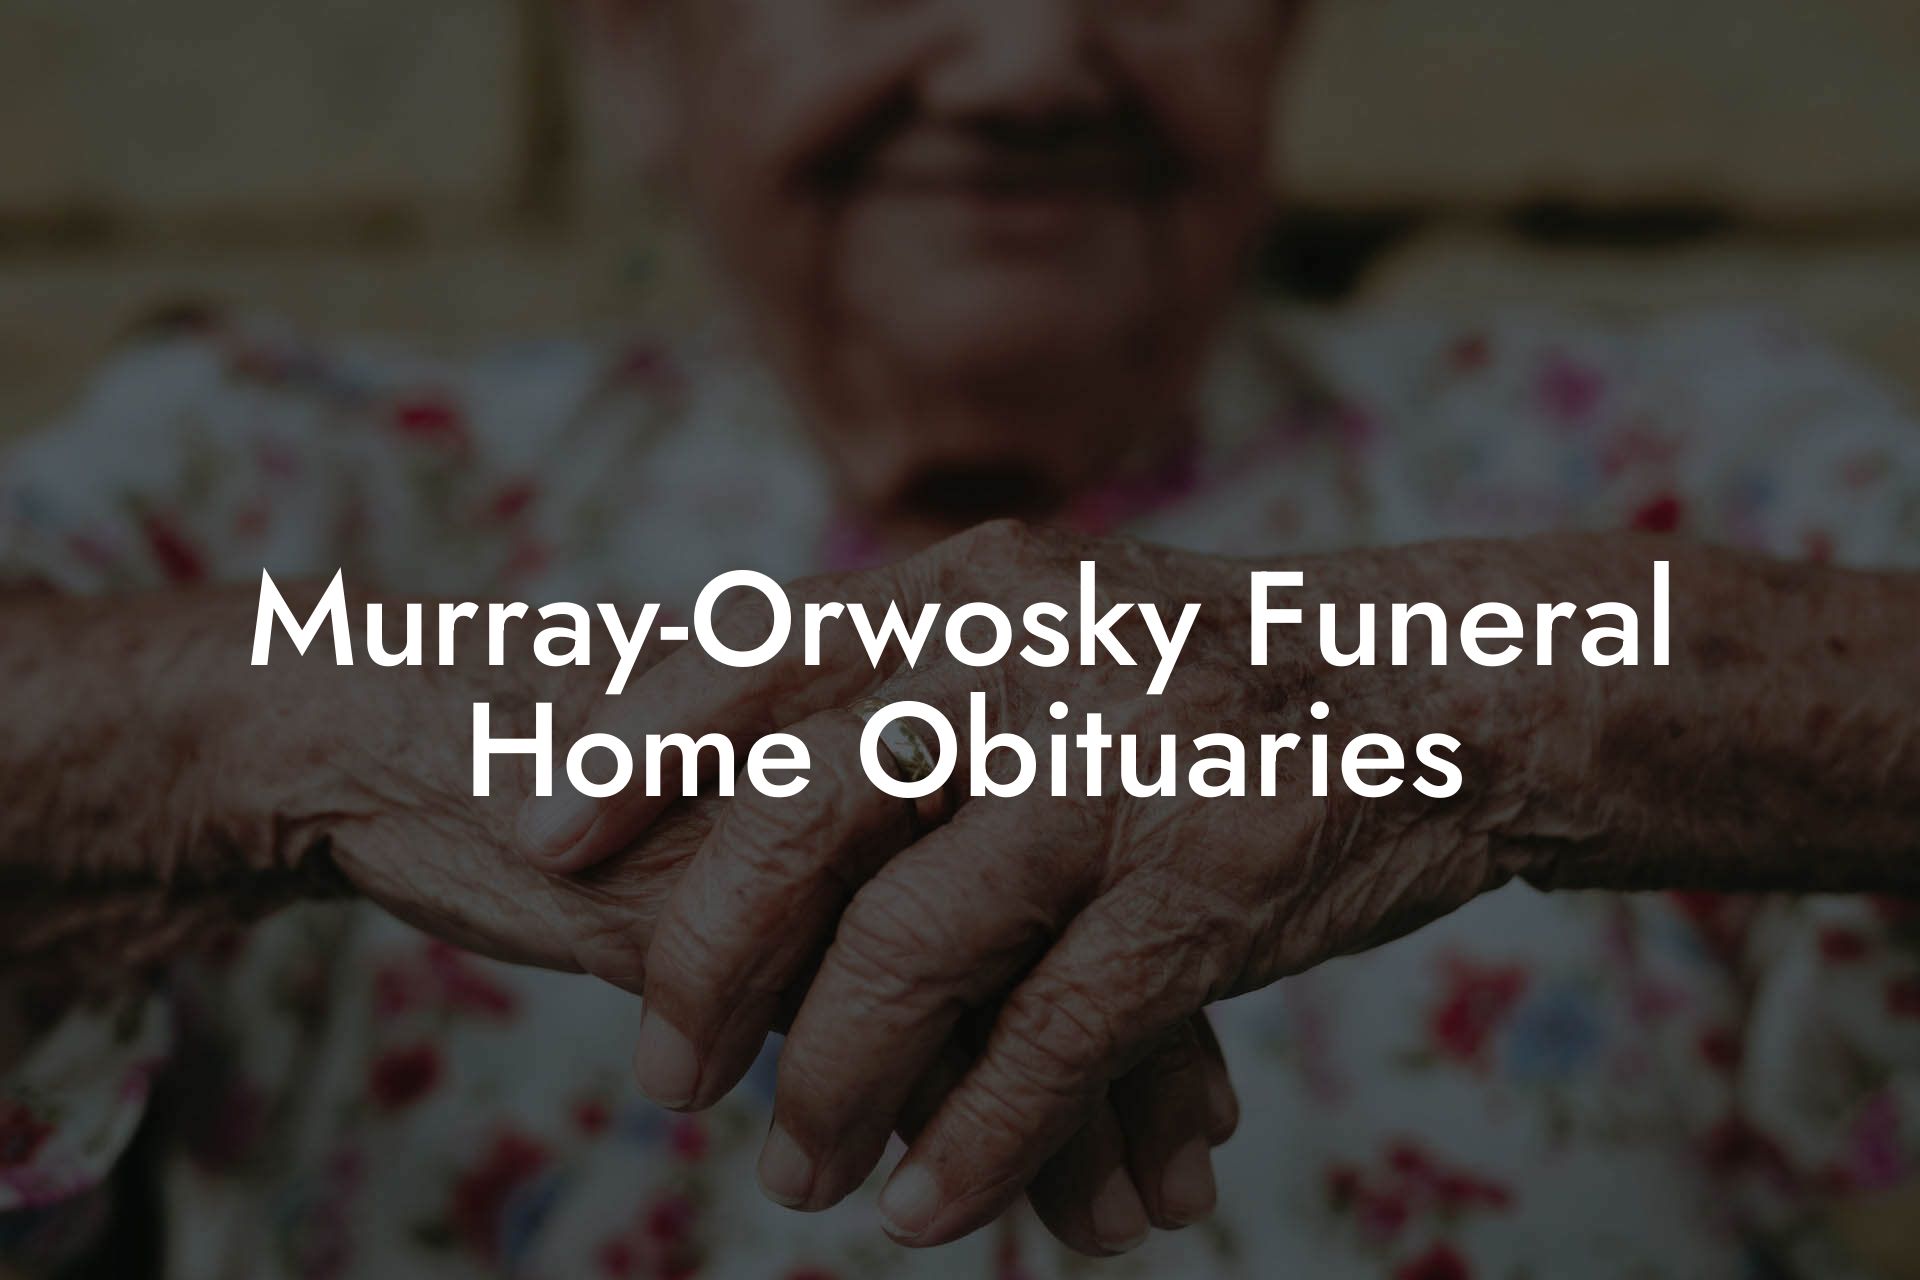 Murray-Orwosky Funeral Home Obituaries